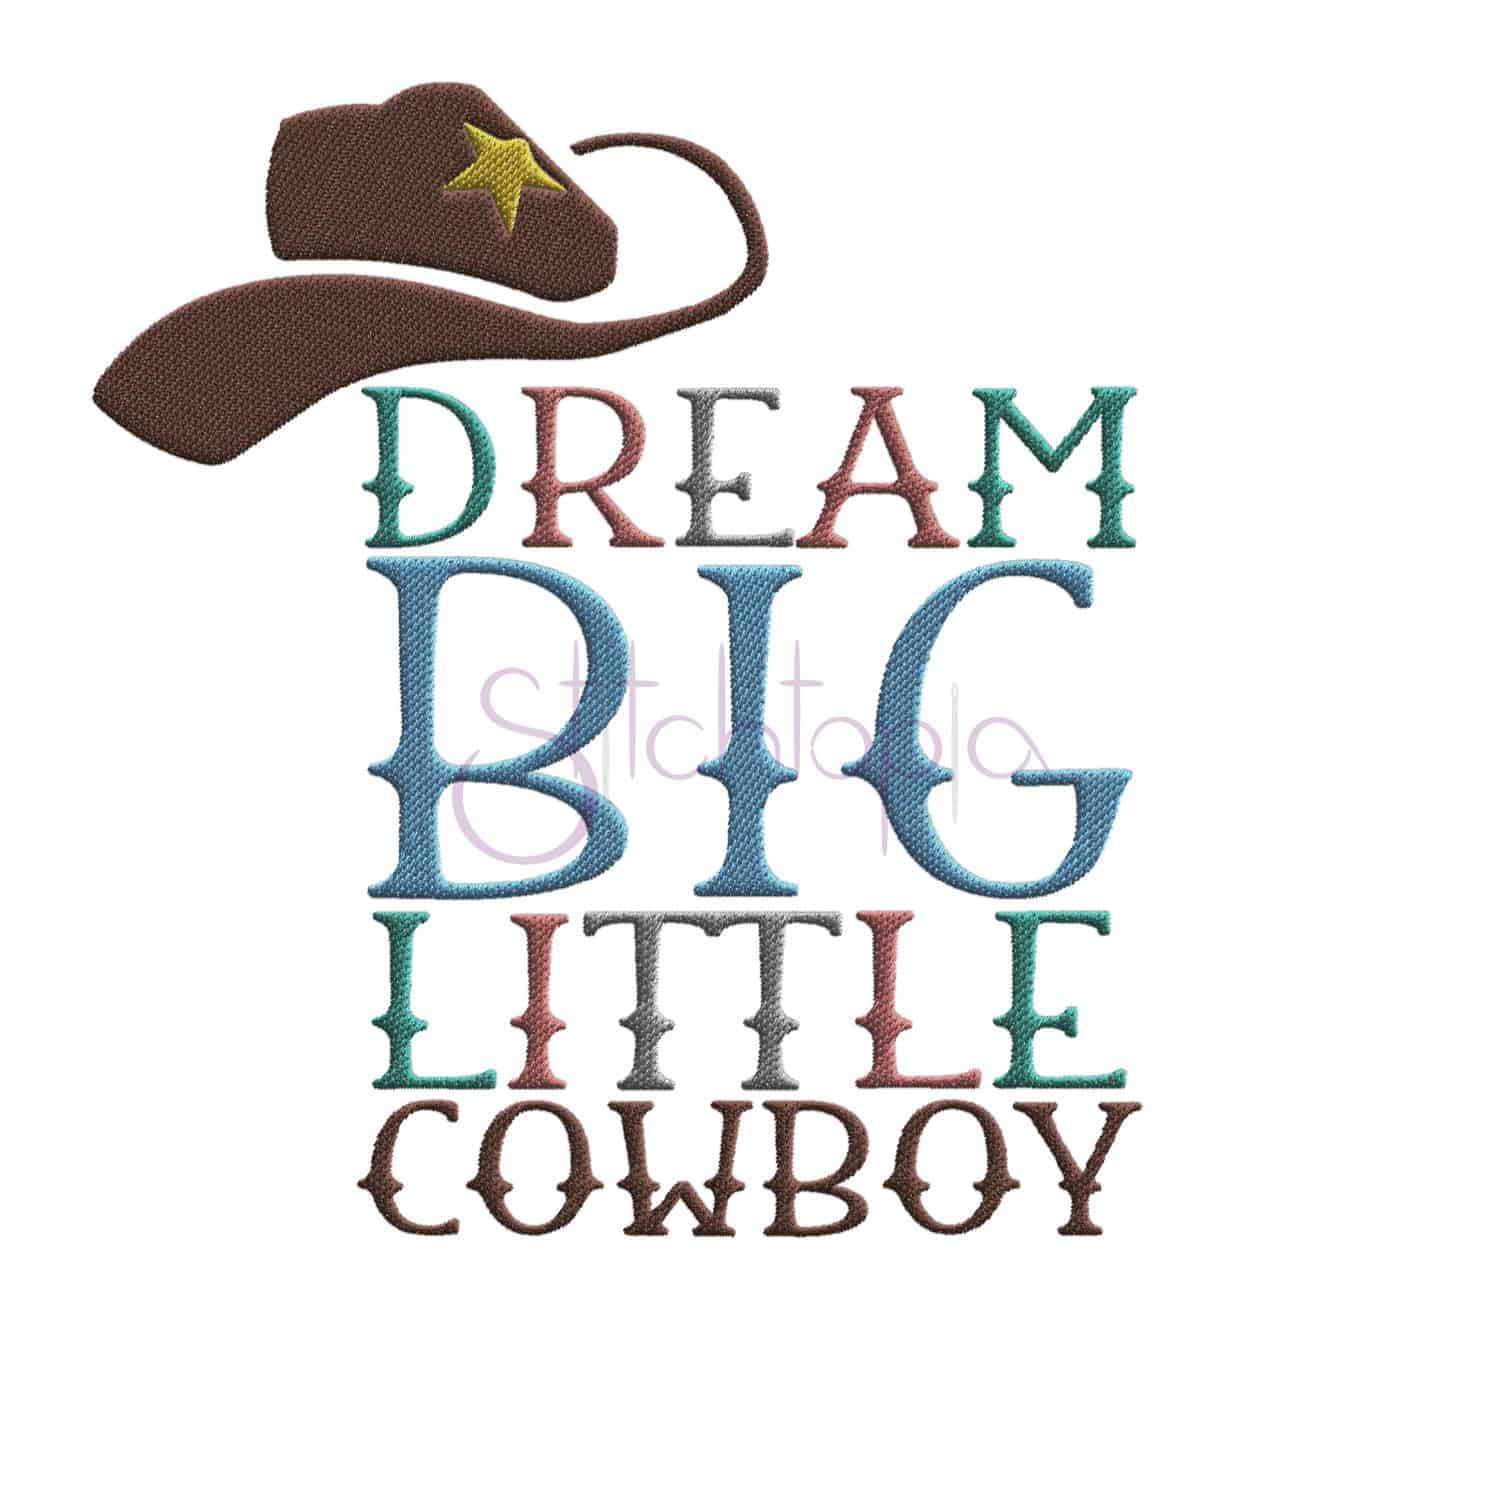 dream big little cowboy